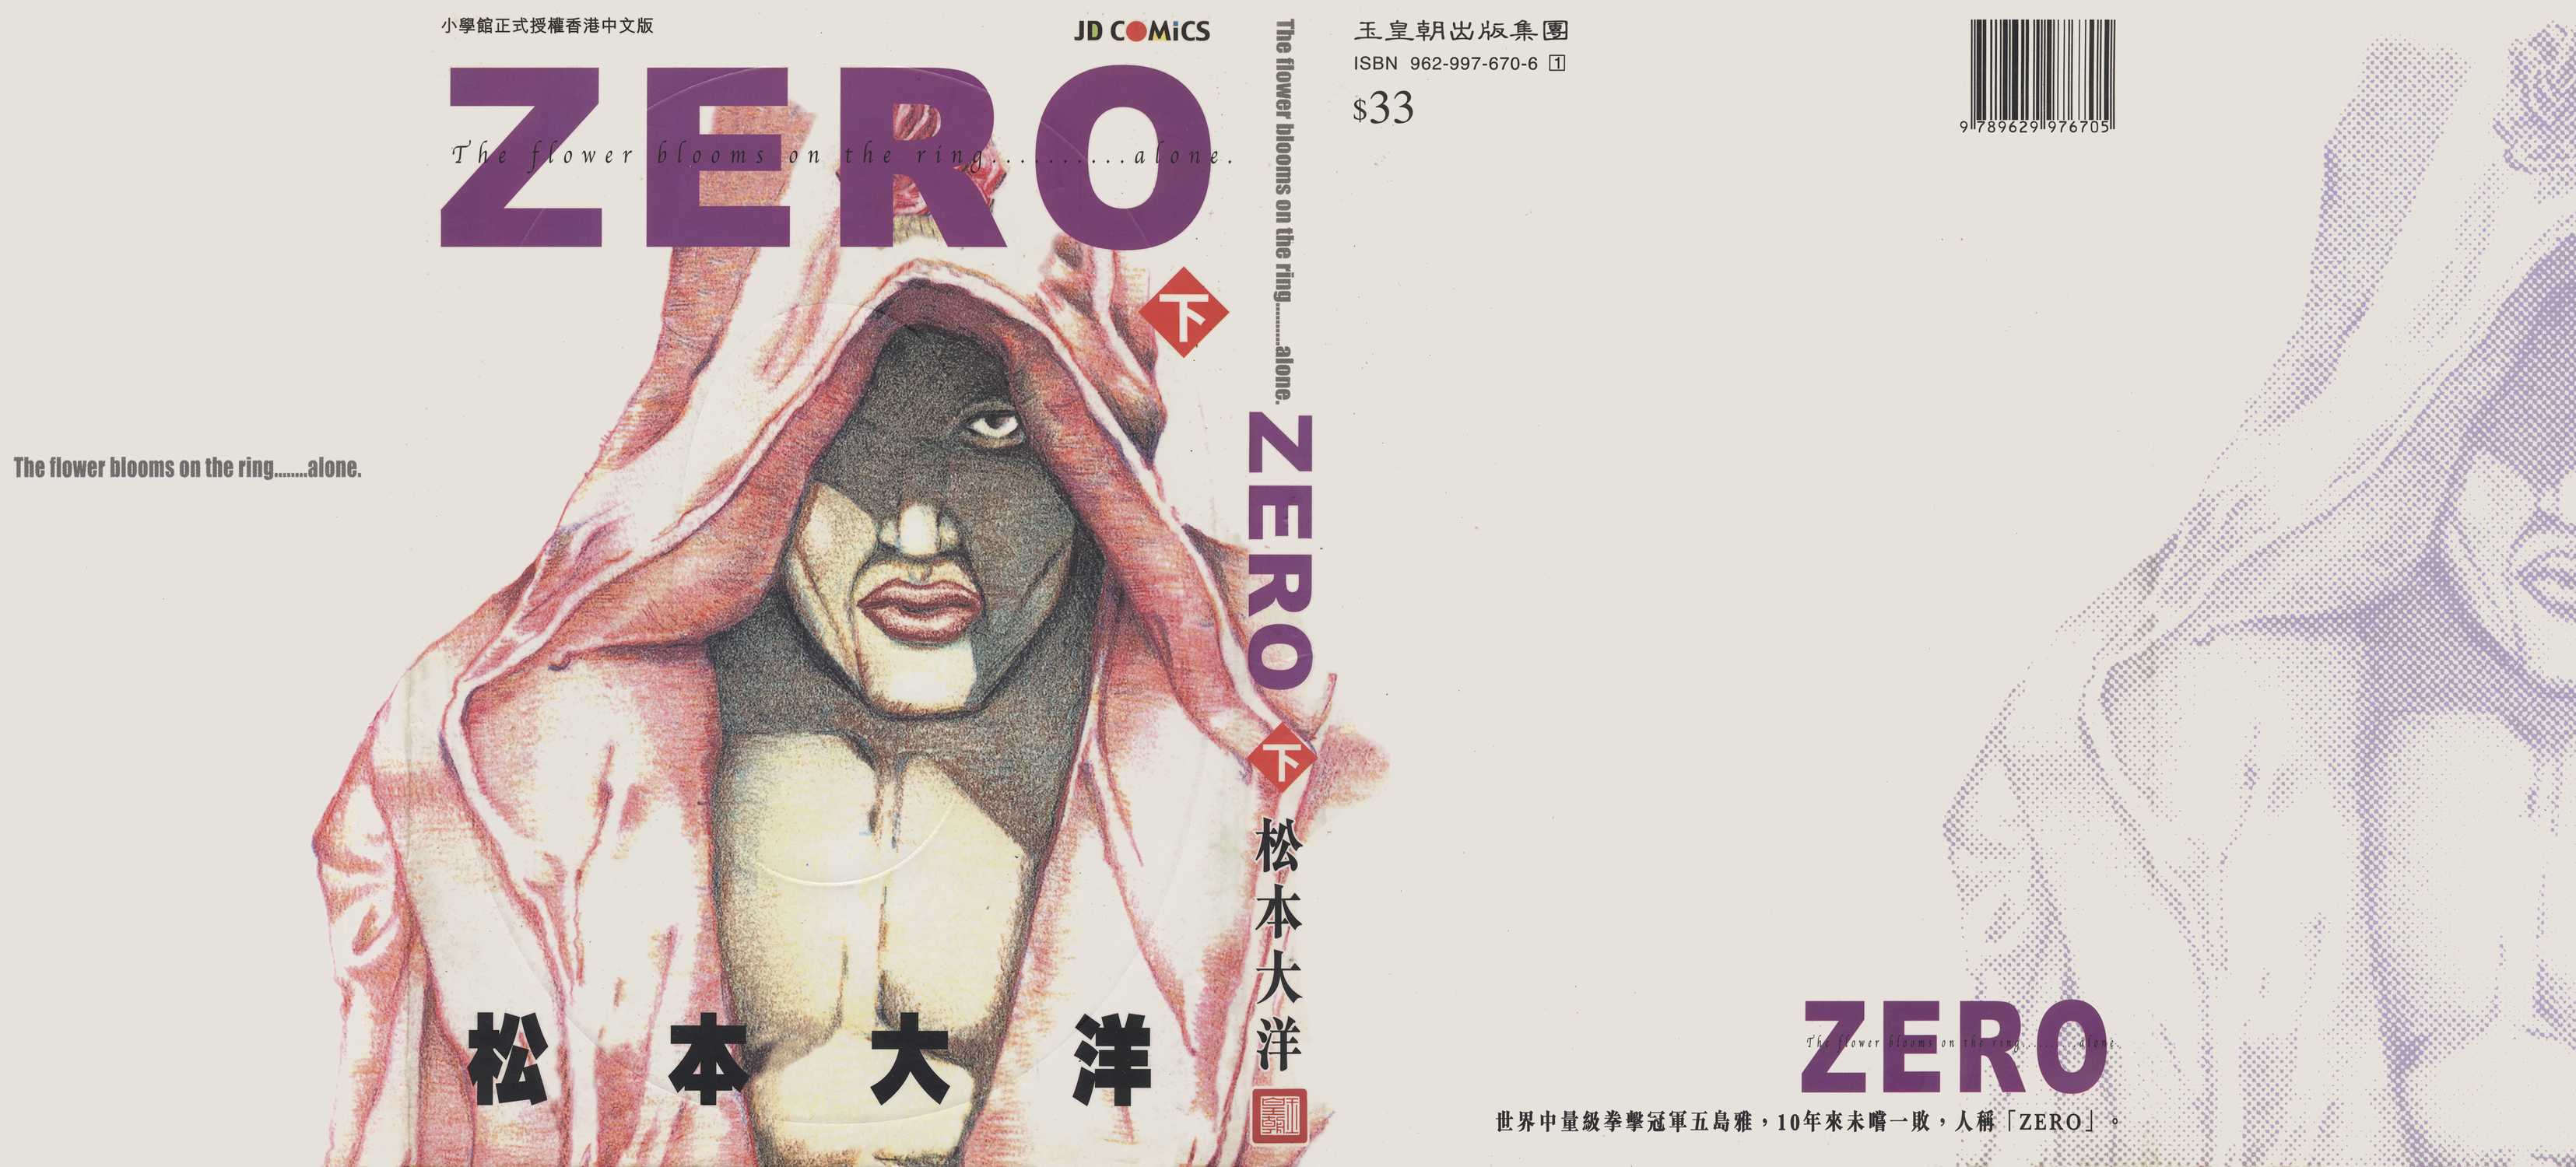 漫画 Zero 卷二 Acfun弹幕视频网 认真你就输啦 W ノ つロ